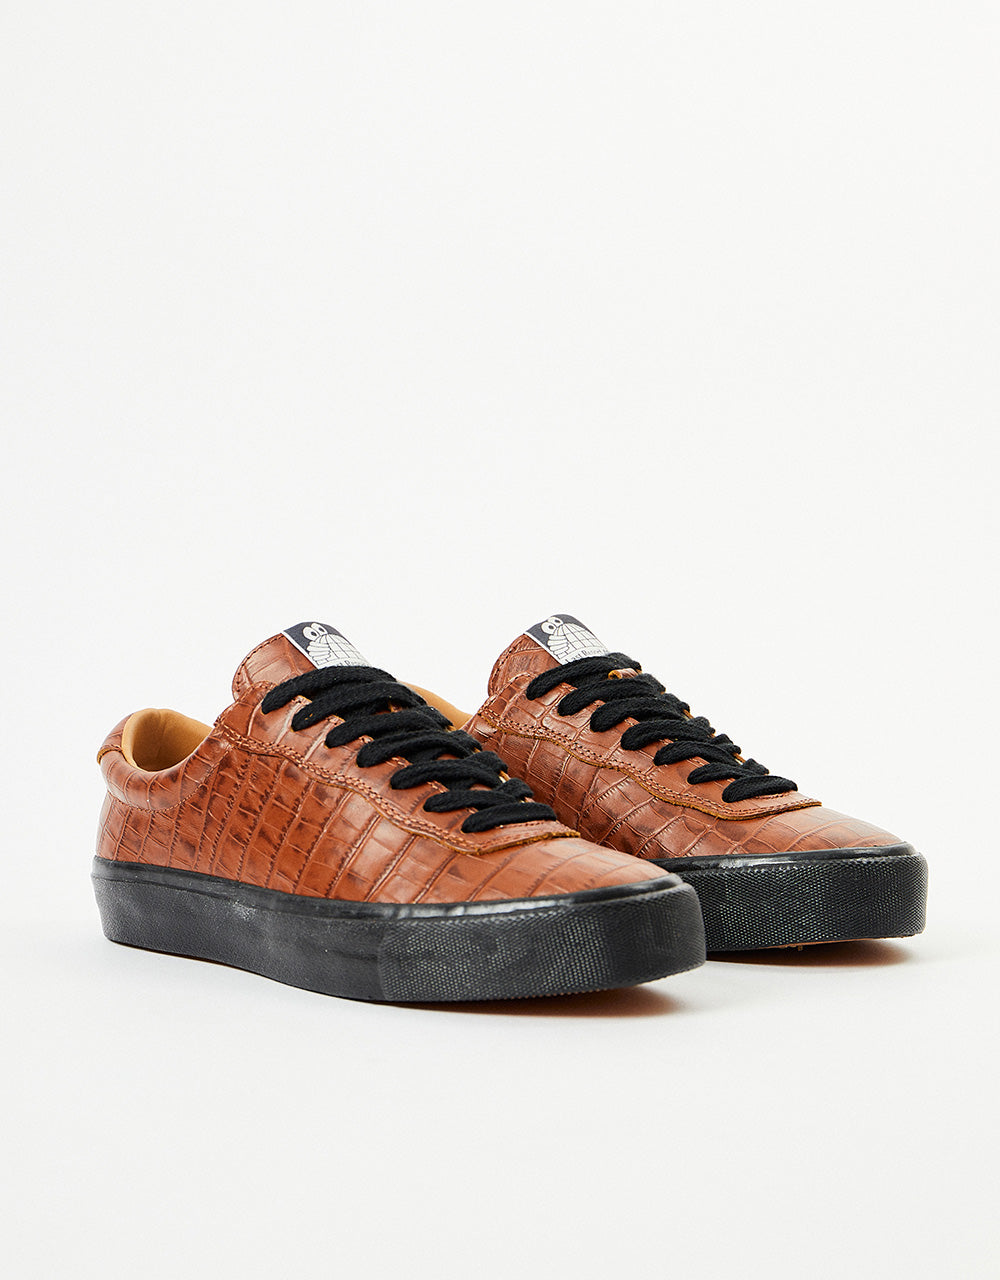 Last Resort AB VM001 Croc Skate Shoes - Brown/Black